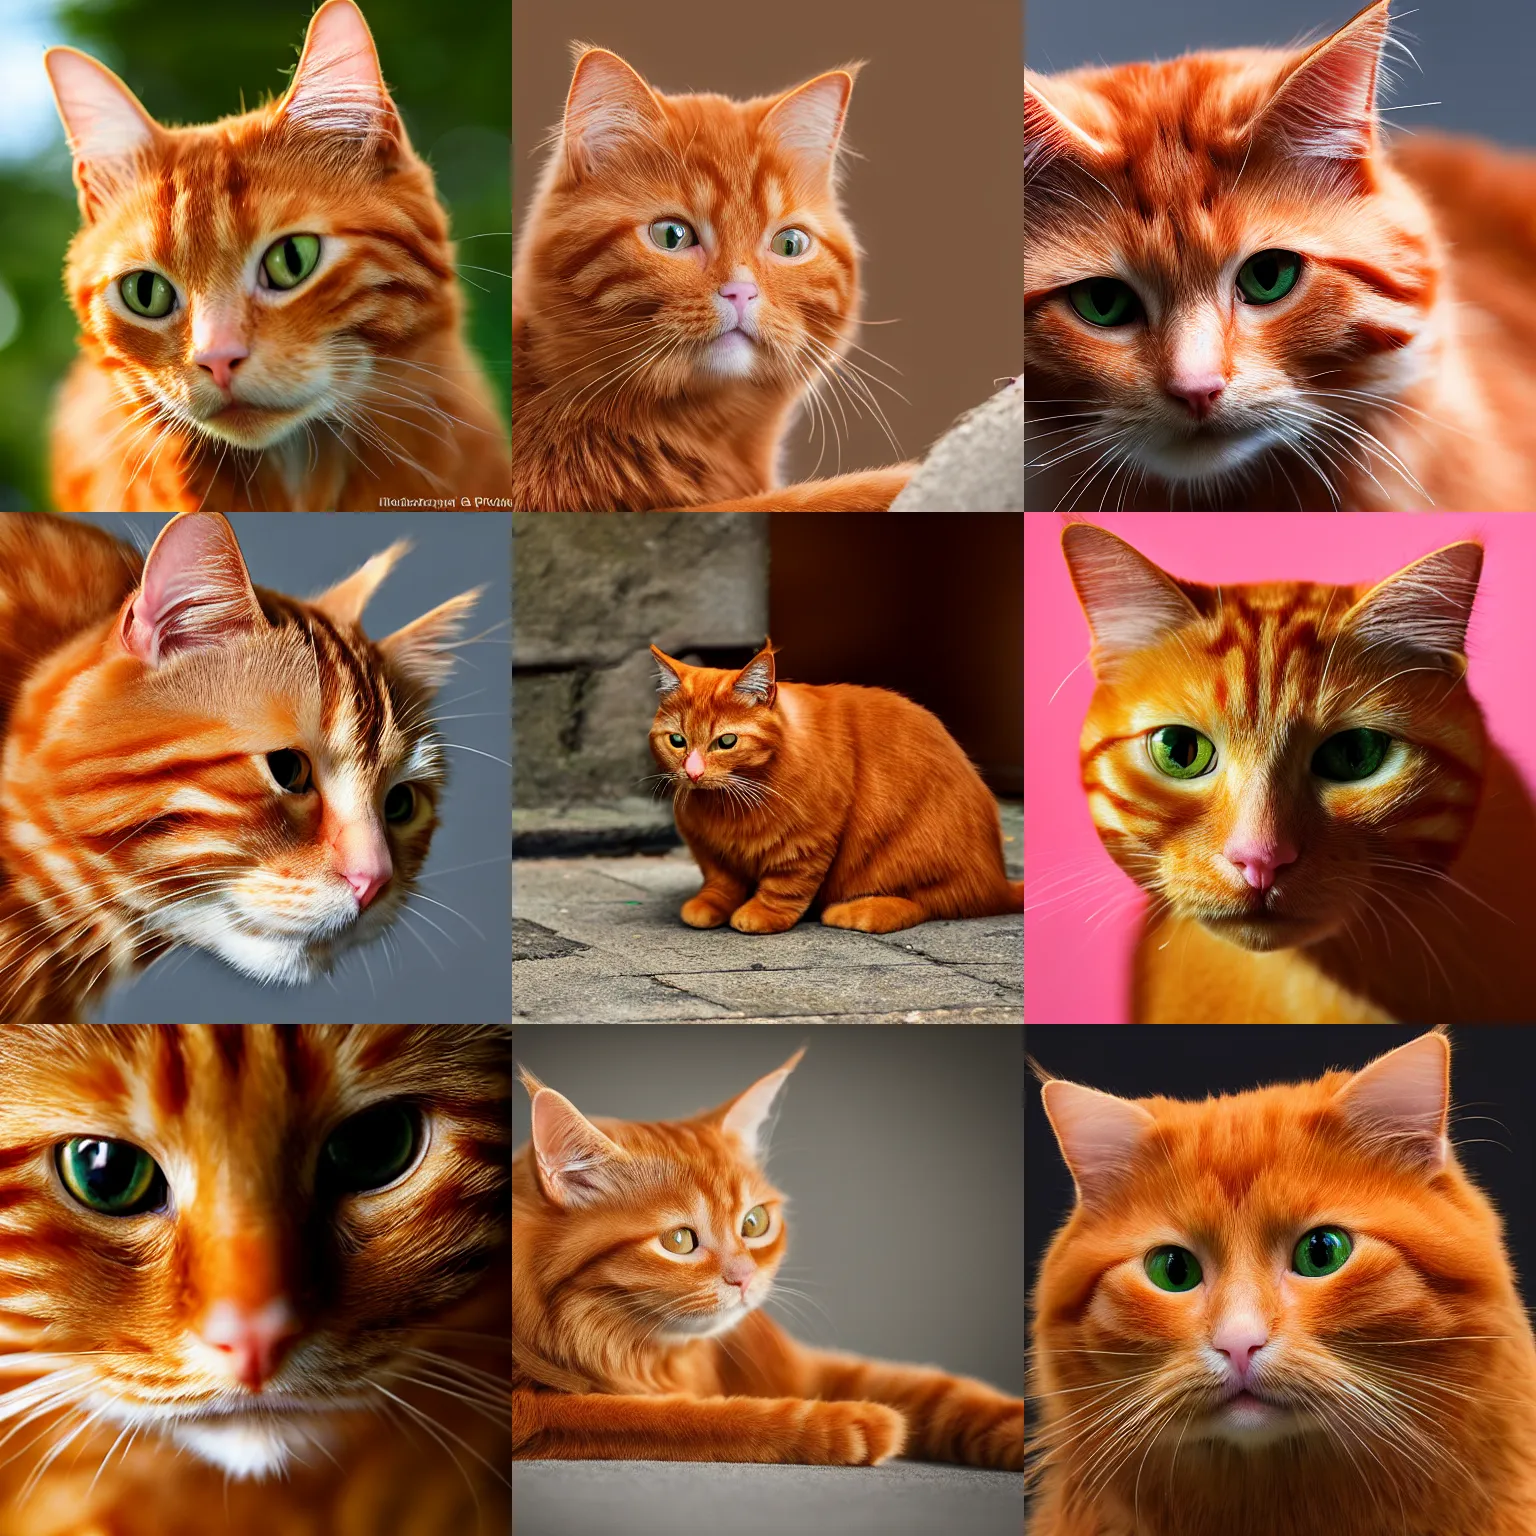 Prompt: ginger cat, 8K resolution, award winning photography, hyperrealism